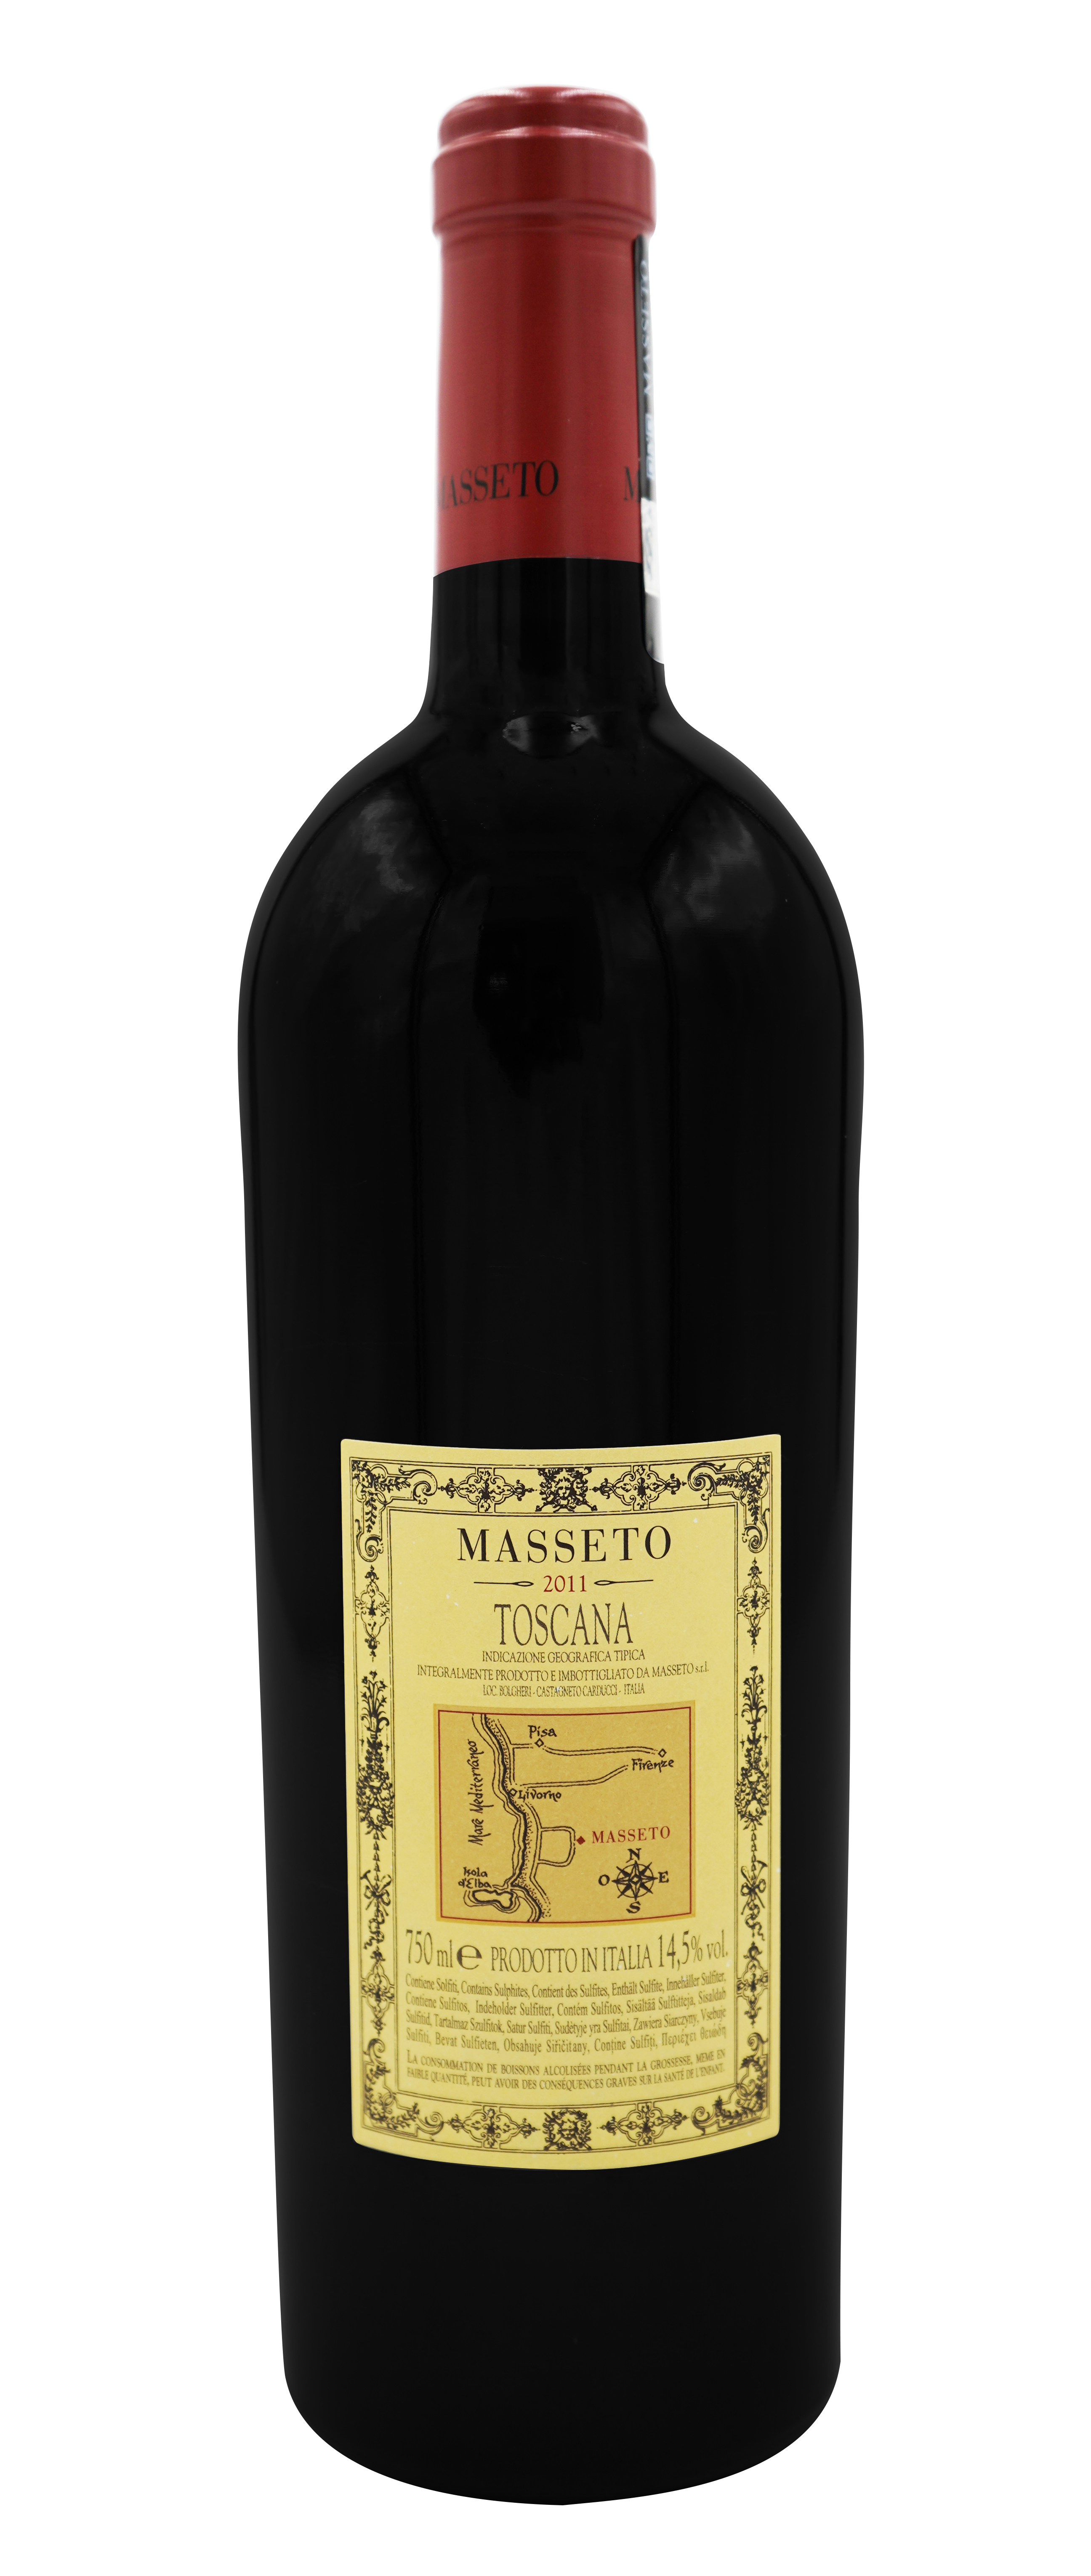 Masseto 2011 - back label